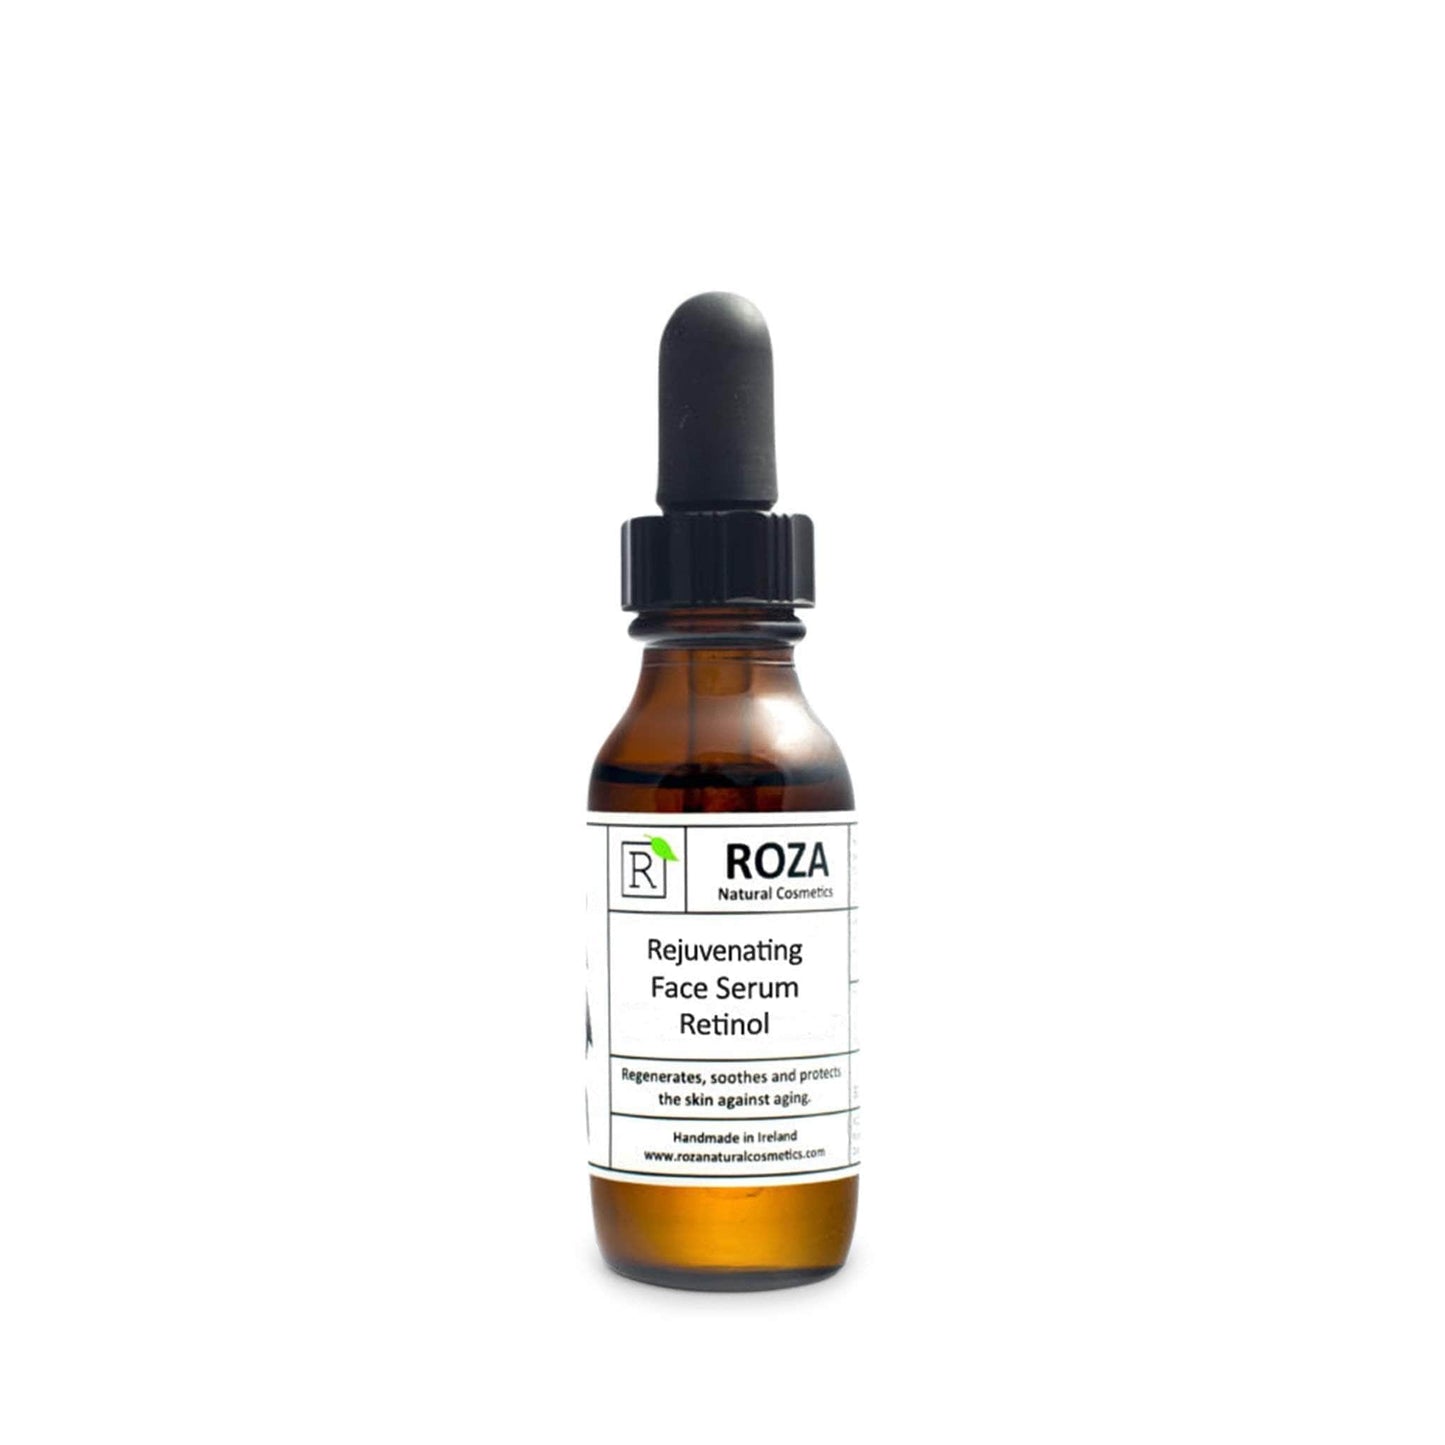 Roza Natural Cosmetics Skincare Roza Rejuvenating Face Serum Retinol 0.5% - 30ml